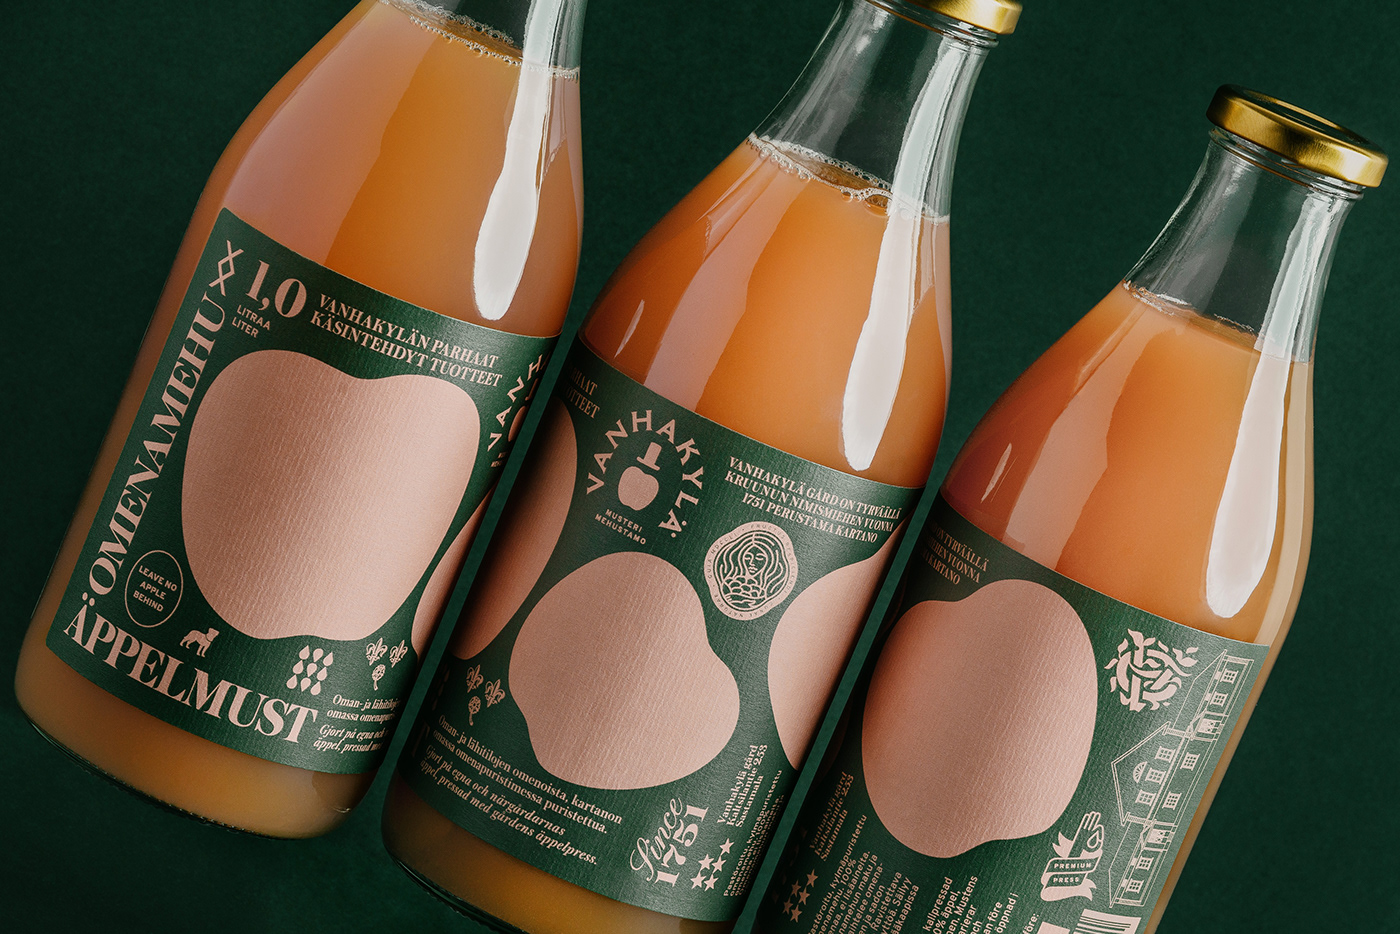 apple juice apples beverage bottle branding  identity juice Label Logo Design package